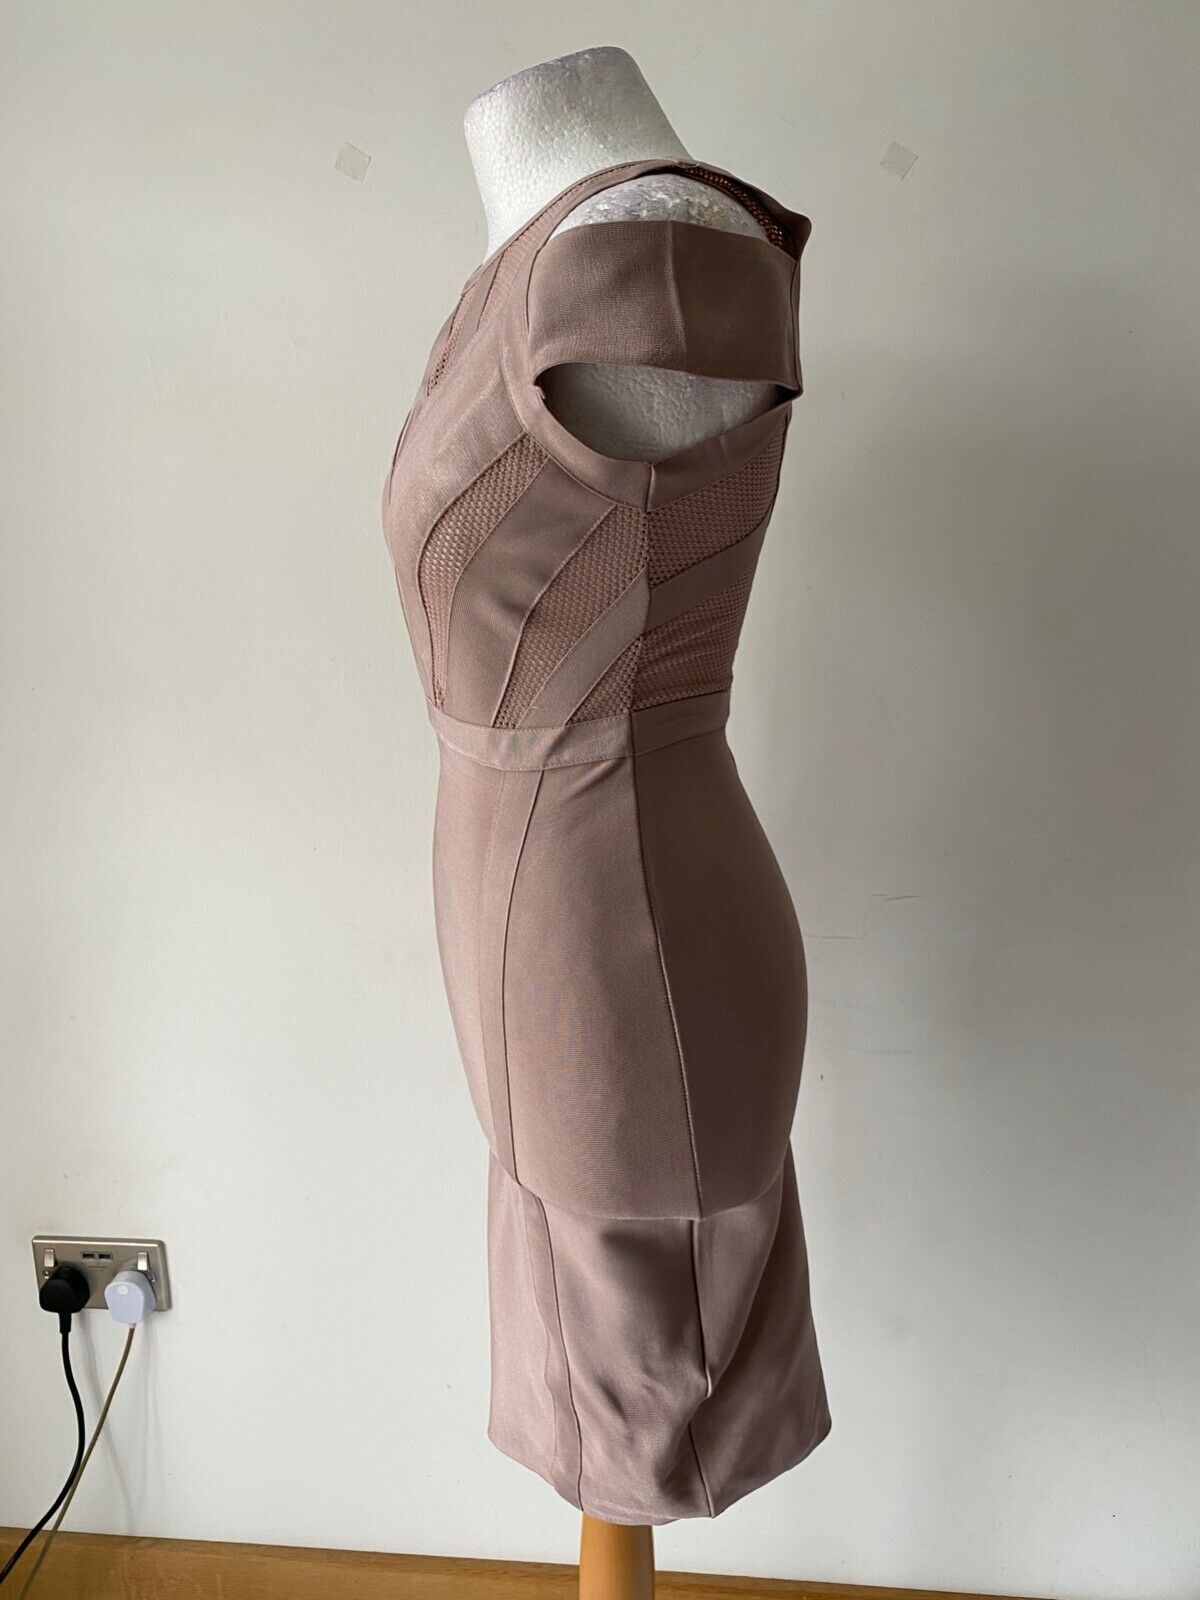 WOW Couture Blush Pink Bodycon Dress Size M 8 - 10 Bandage